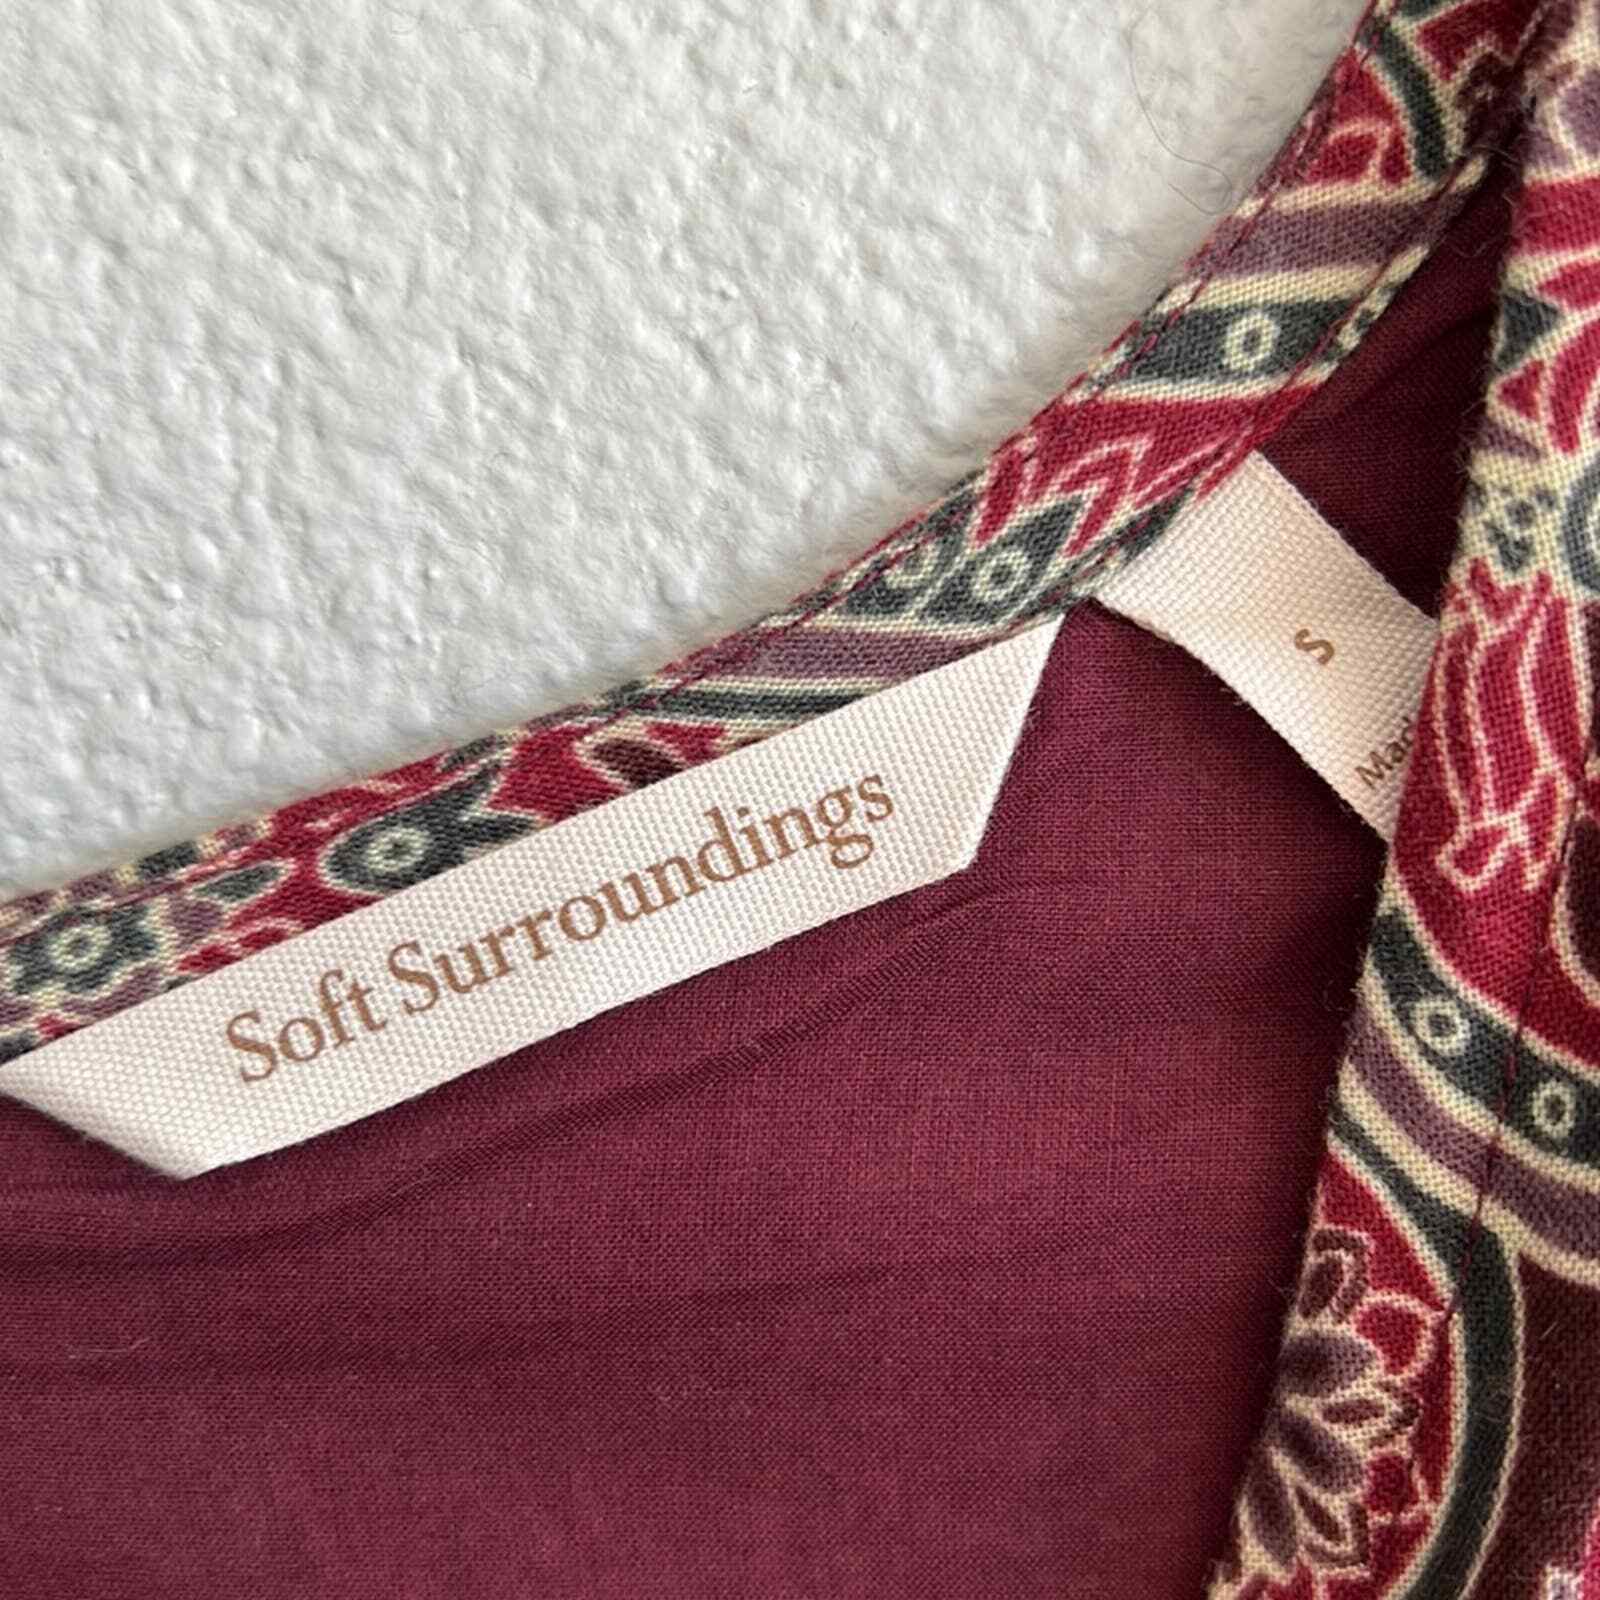 Soft Surroundings Aideen Mixed Print Dress - image 5